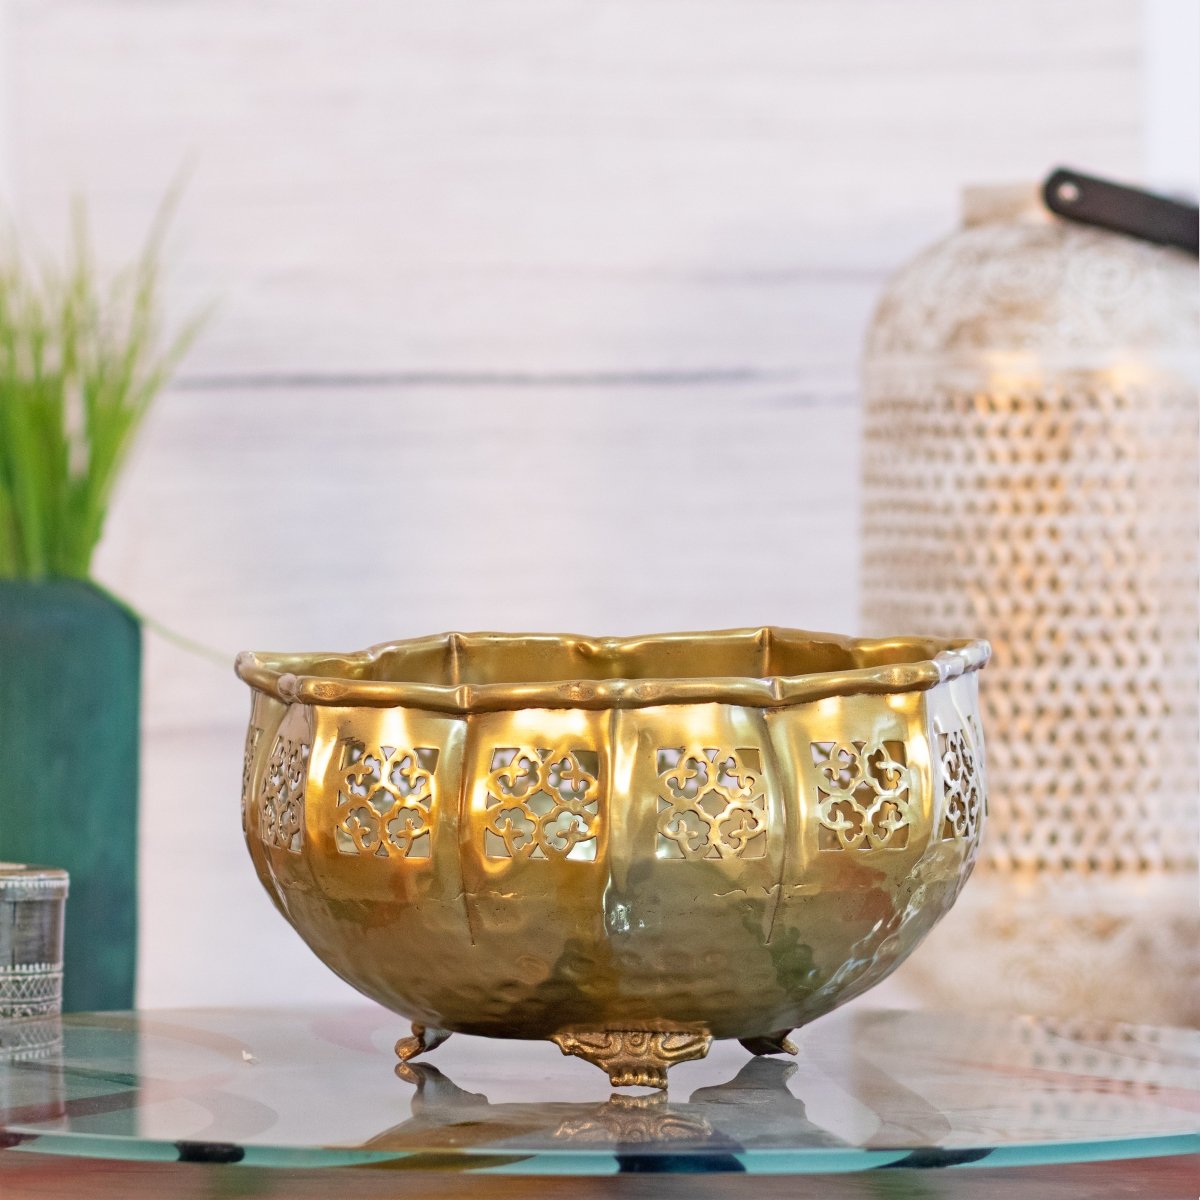 Kezevel Metal Decorative Urli Bowl - Gold Finish Traditional Handcrafted Urli Bowl for Flowers and Candles, Urli Pots